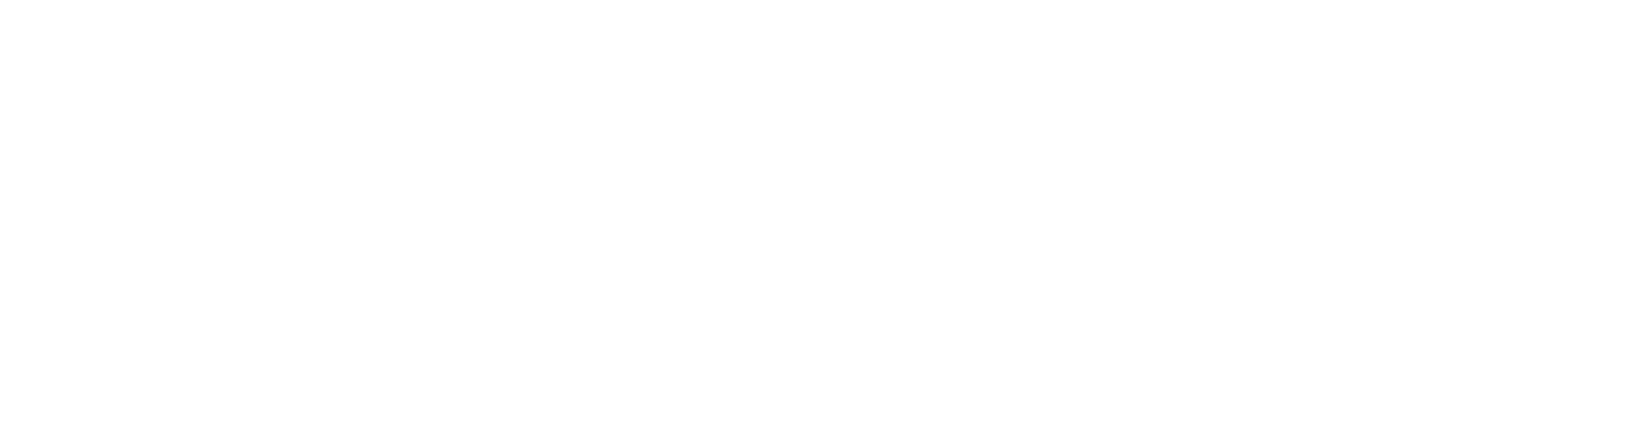 Petros Pharmaceuticals Logo groß für dunkle Hintergründe (transparentes PNG)